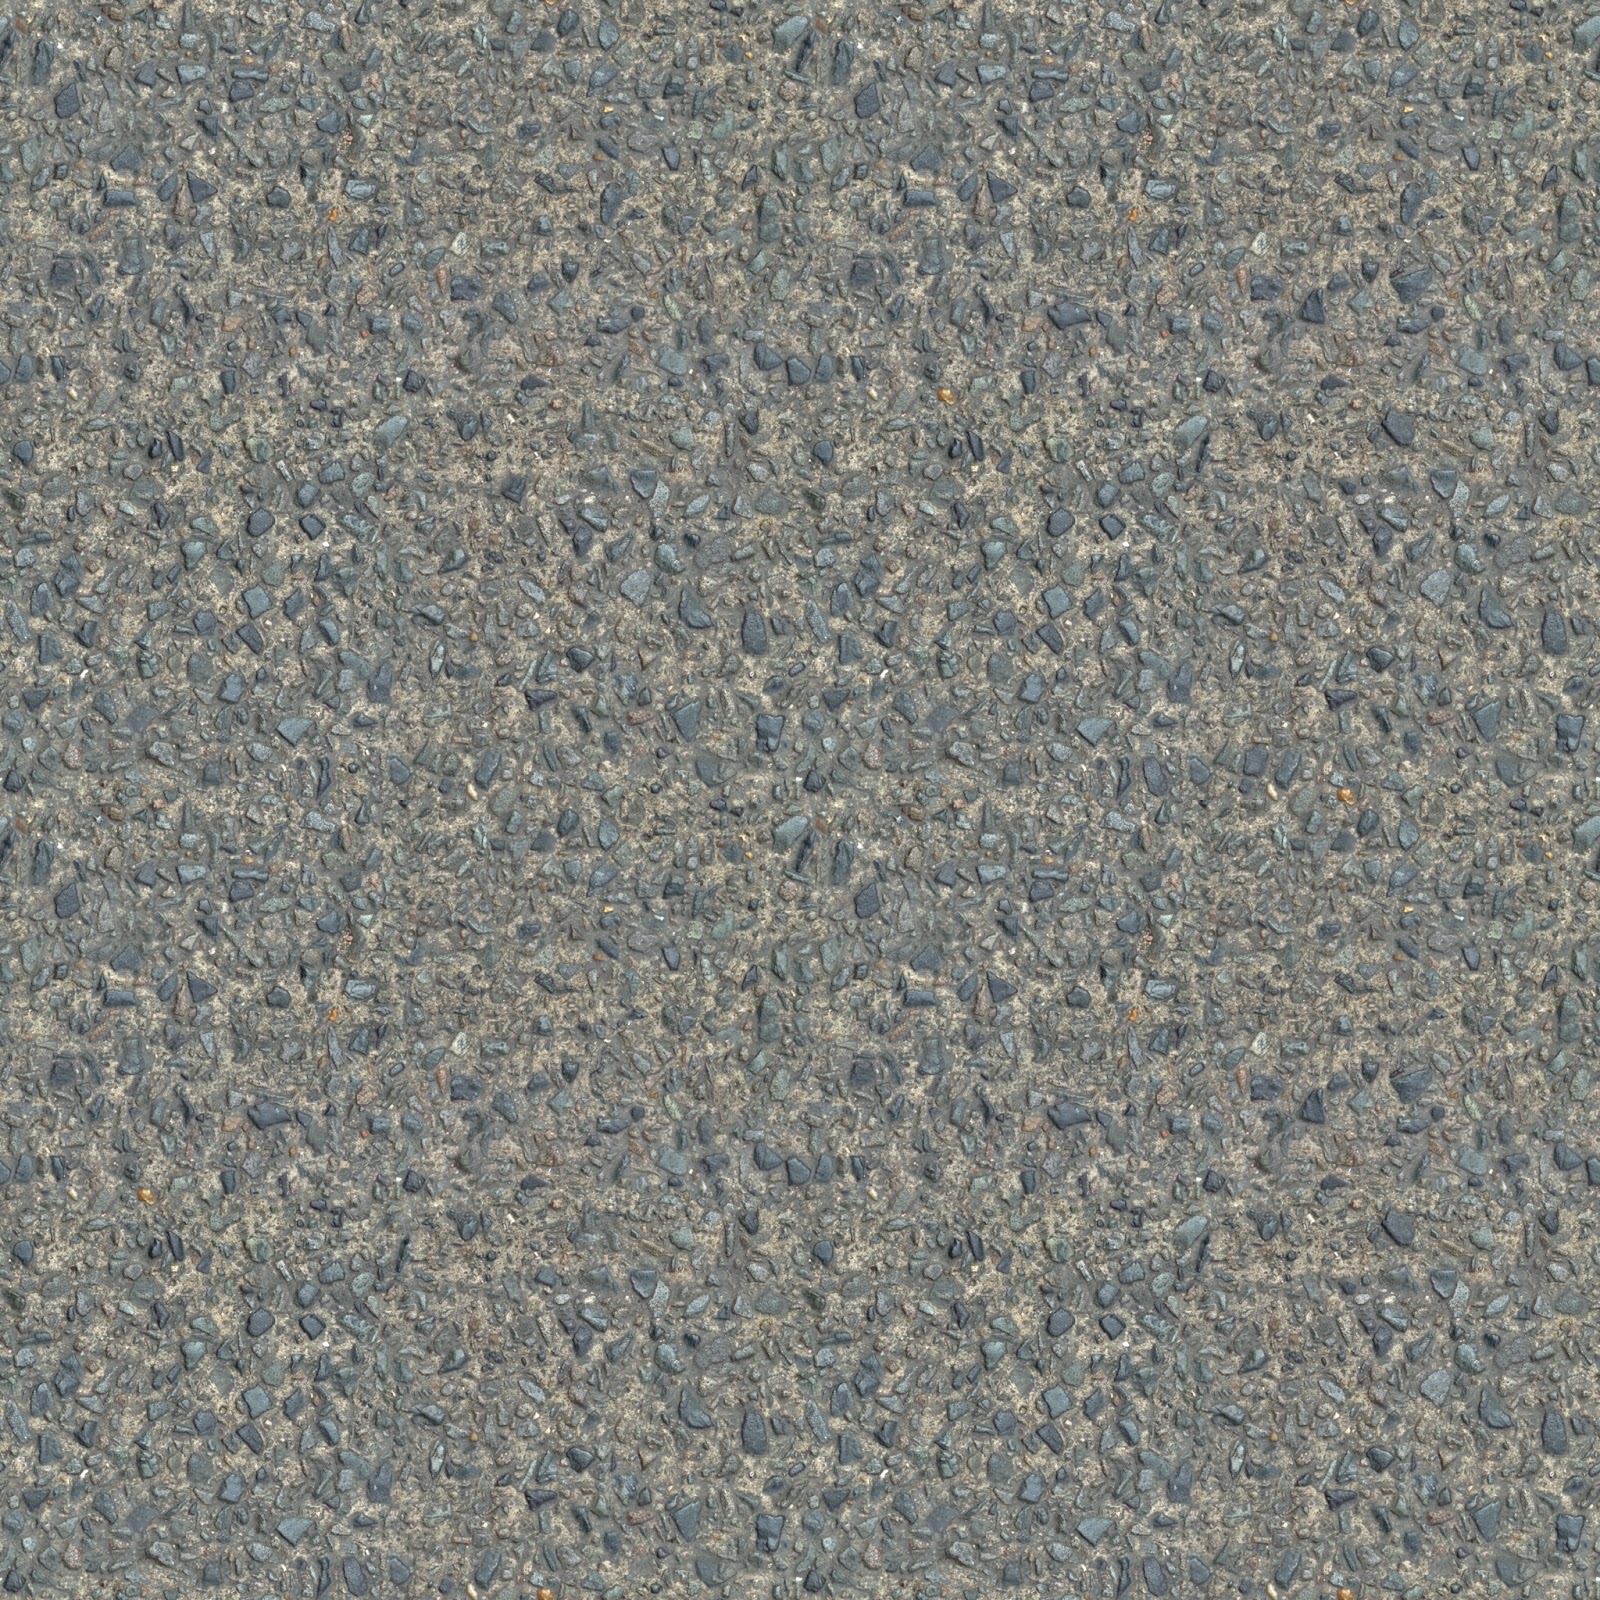 (CONCRETE 16) seamless floor granite stones texture